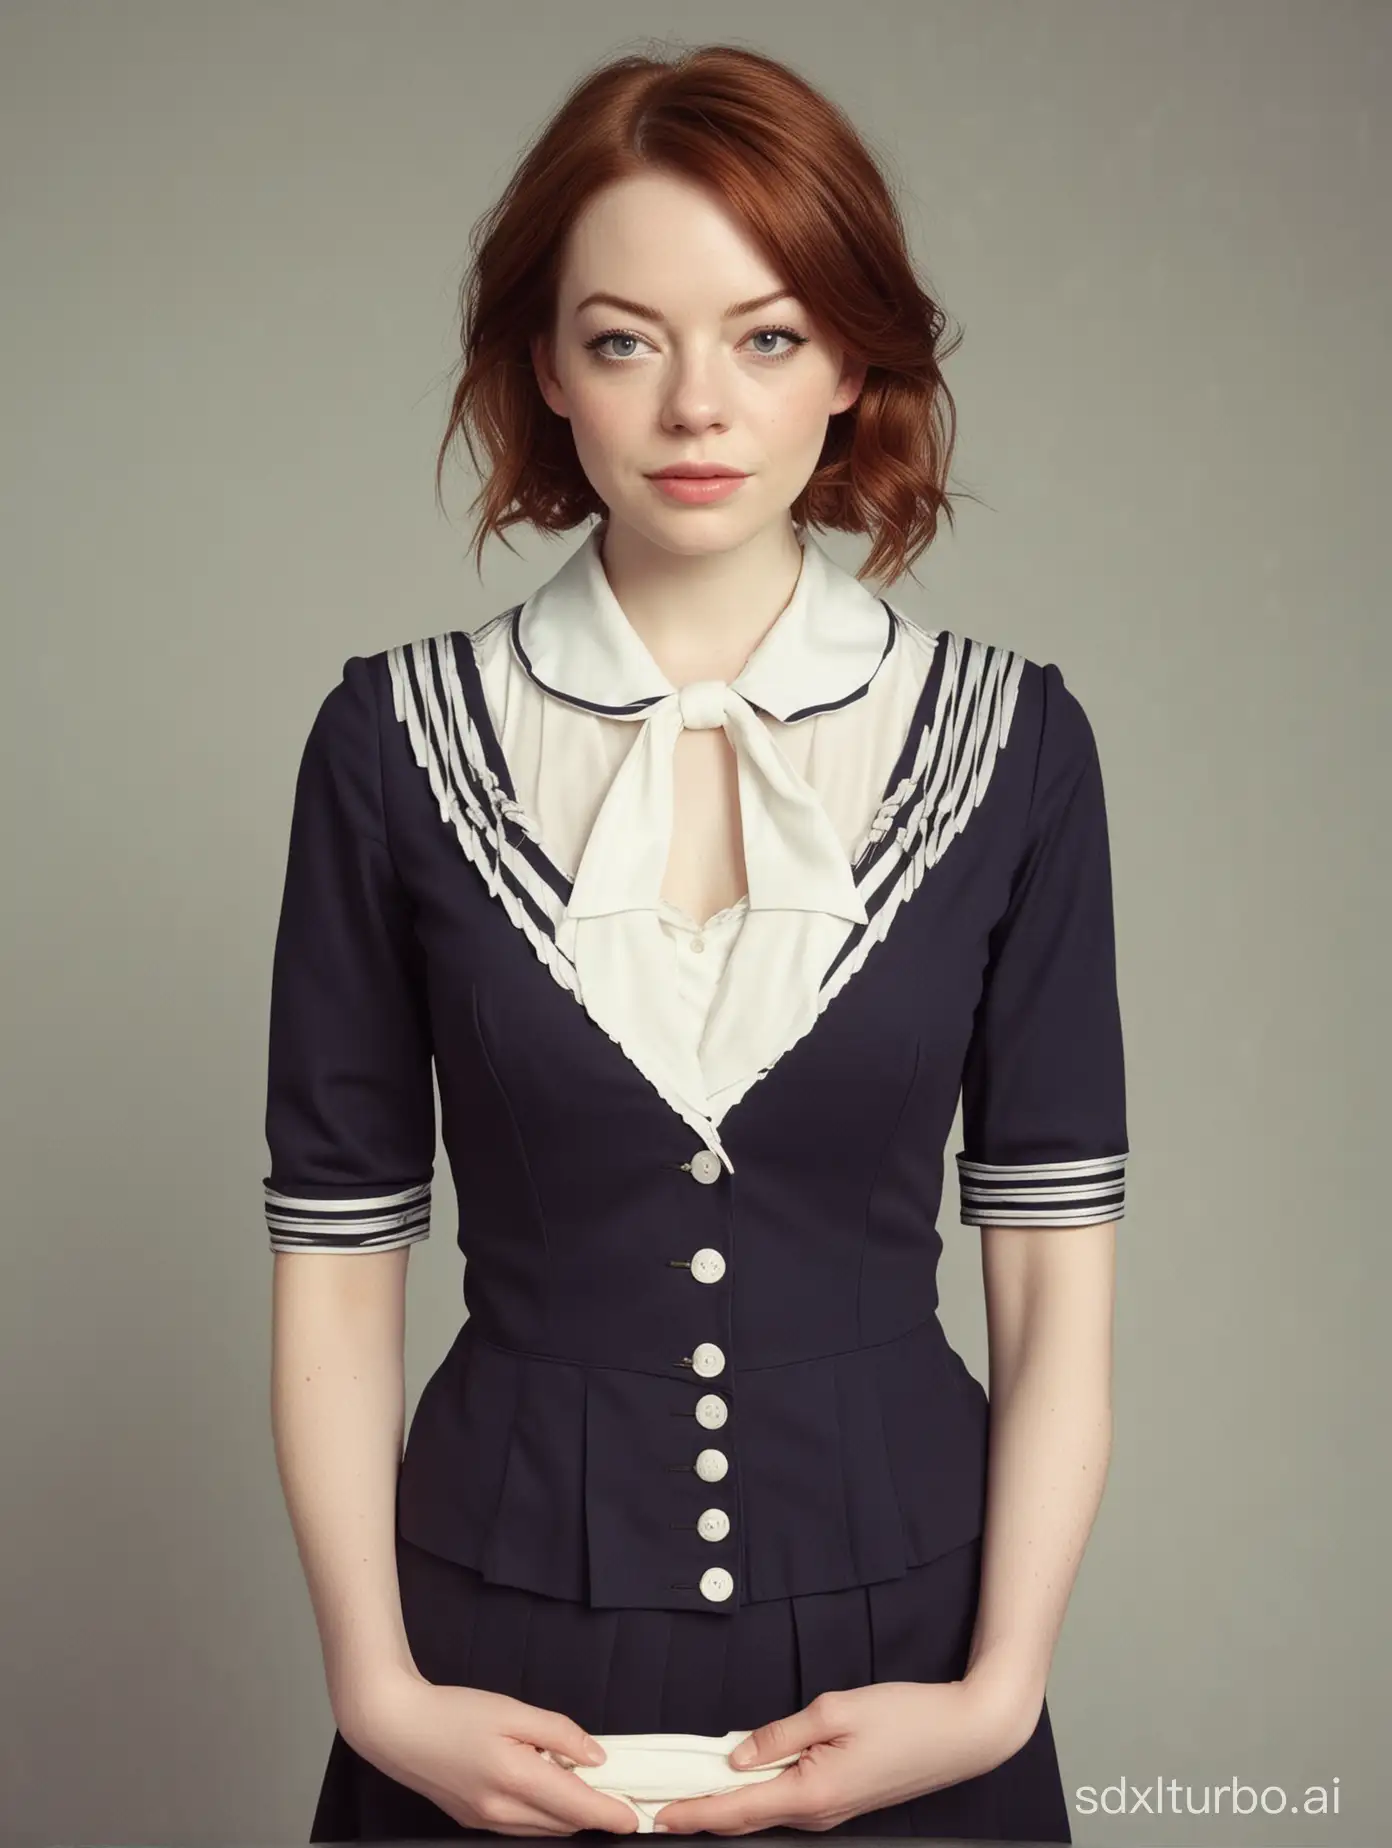 1 woman,like  Emma stone:0.2, huge breast，upper body, sexy, sailor uniform,Photograph by Loretta Lux